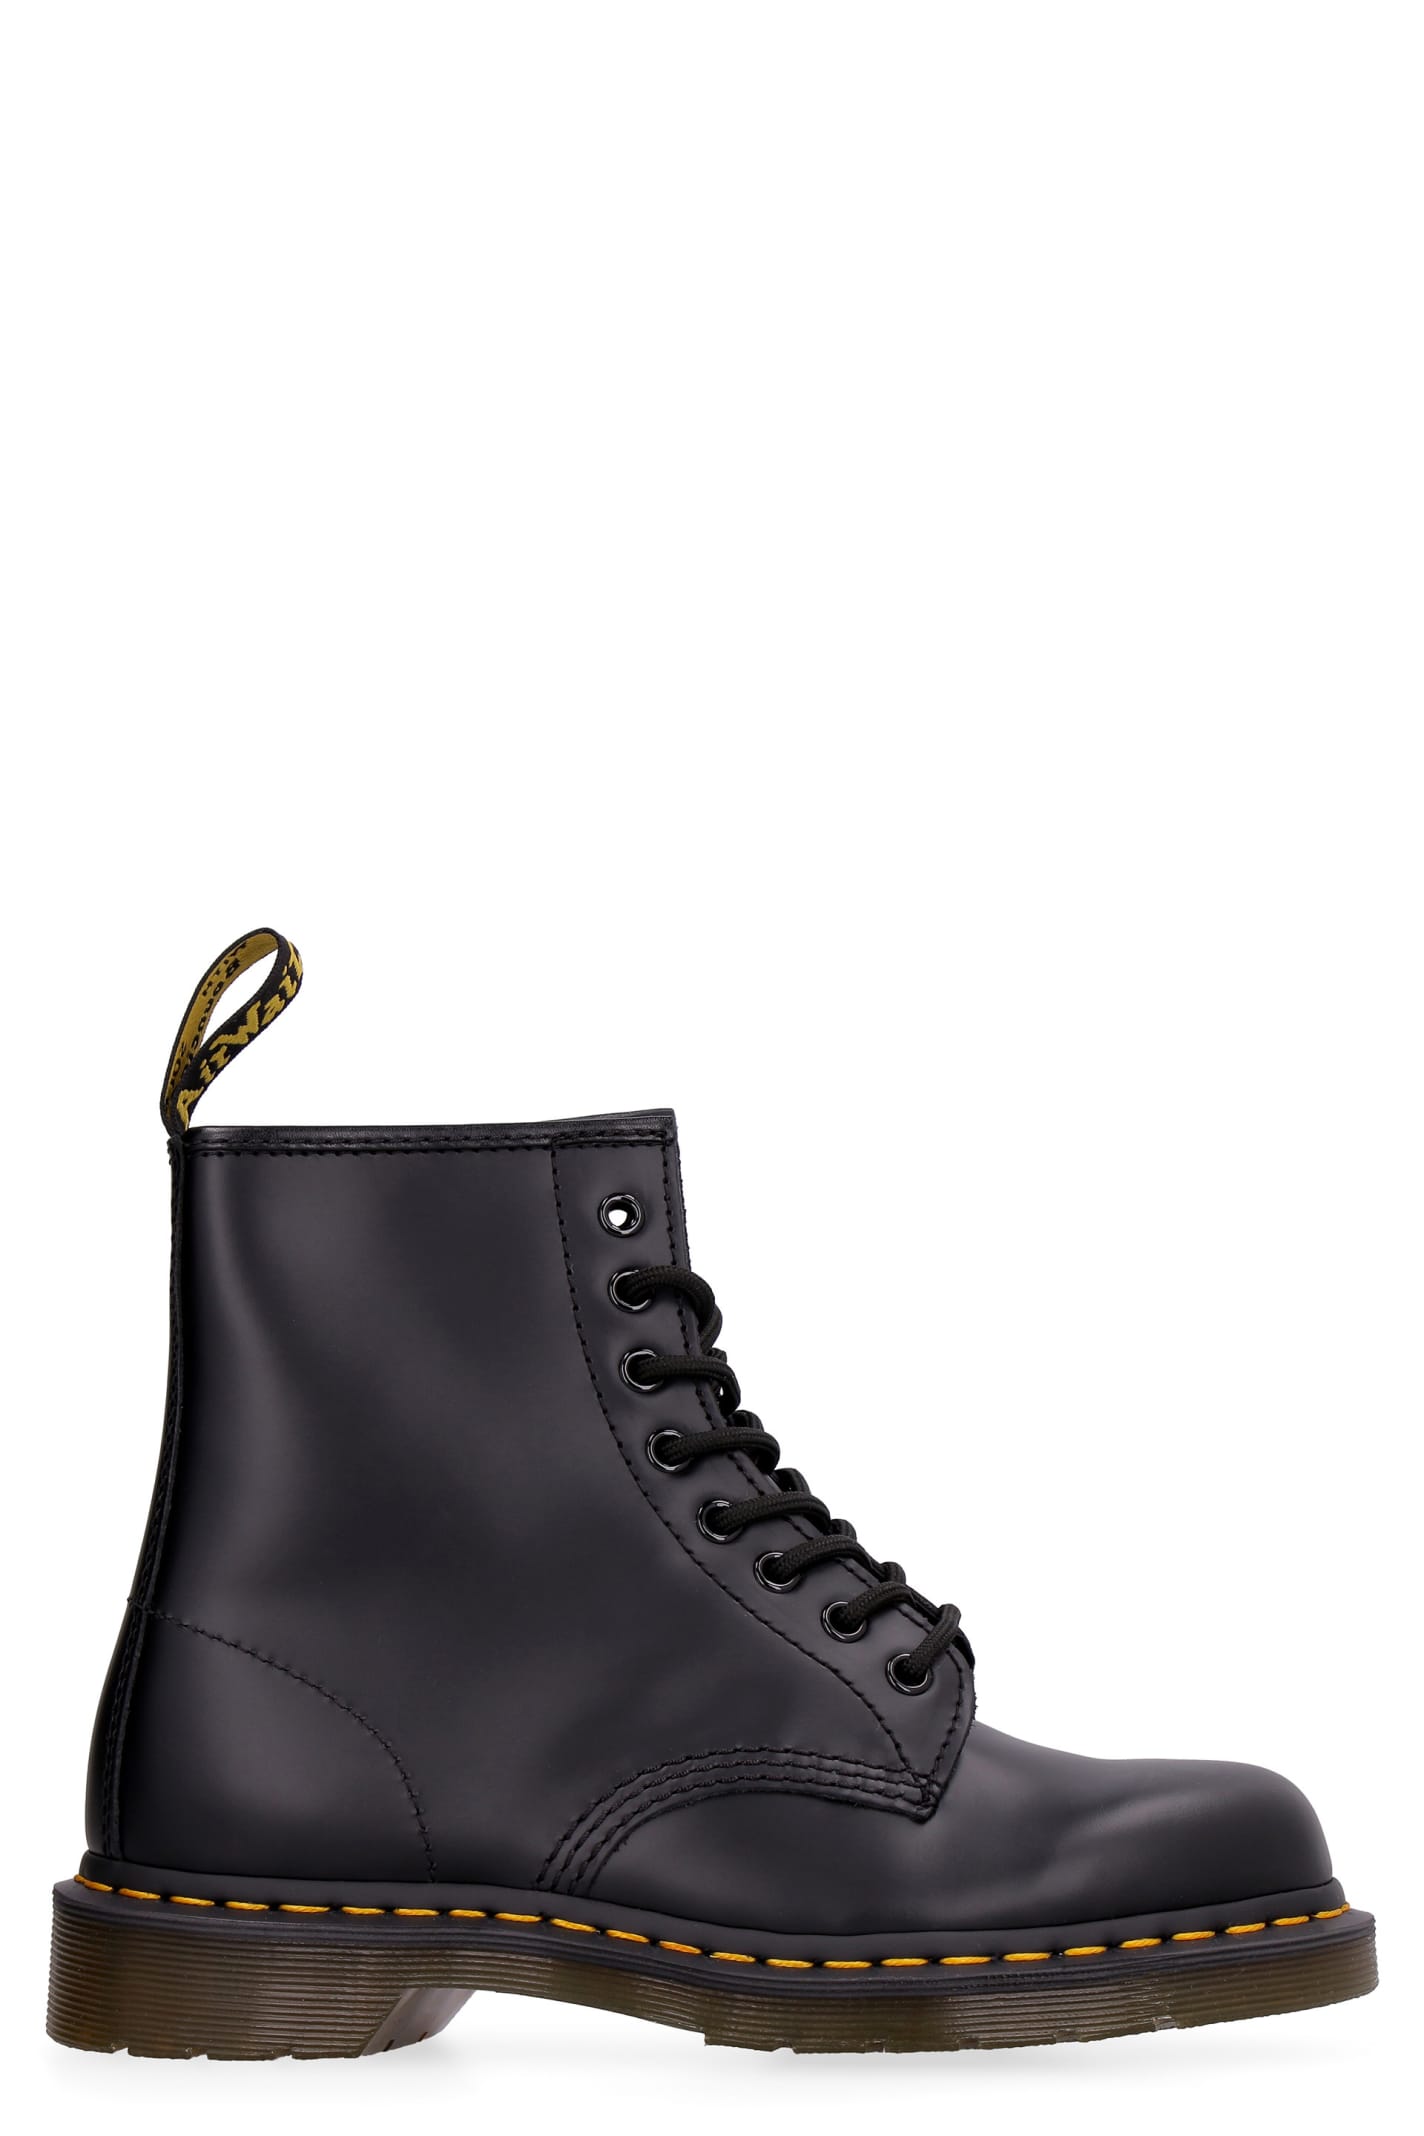 Dr. Martens 1460 Leather Combat Boots